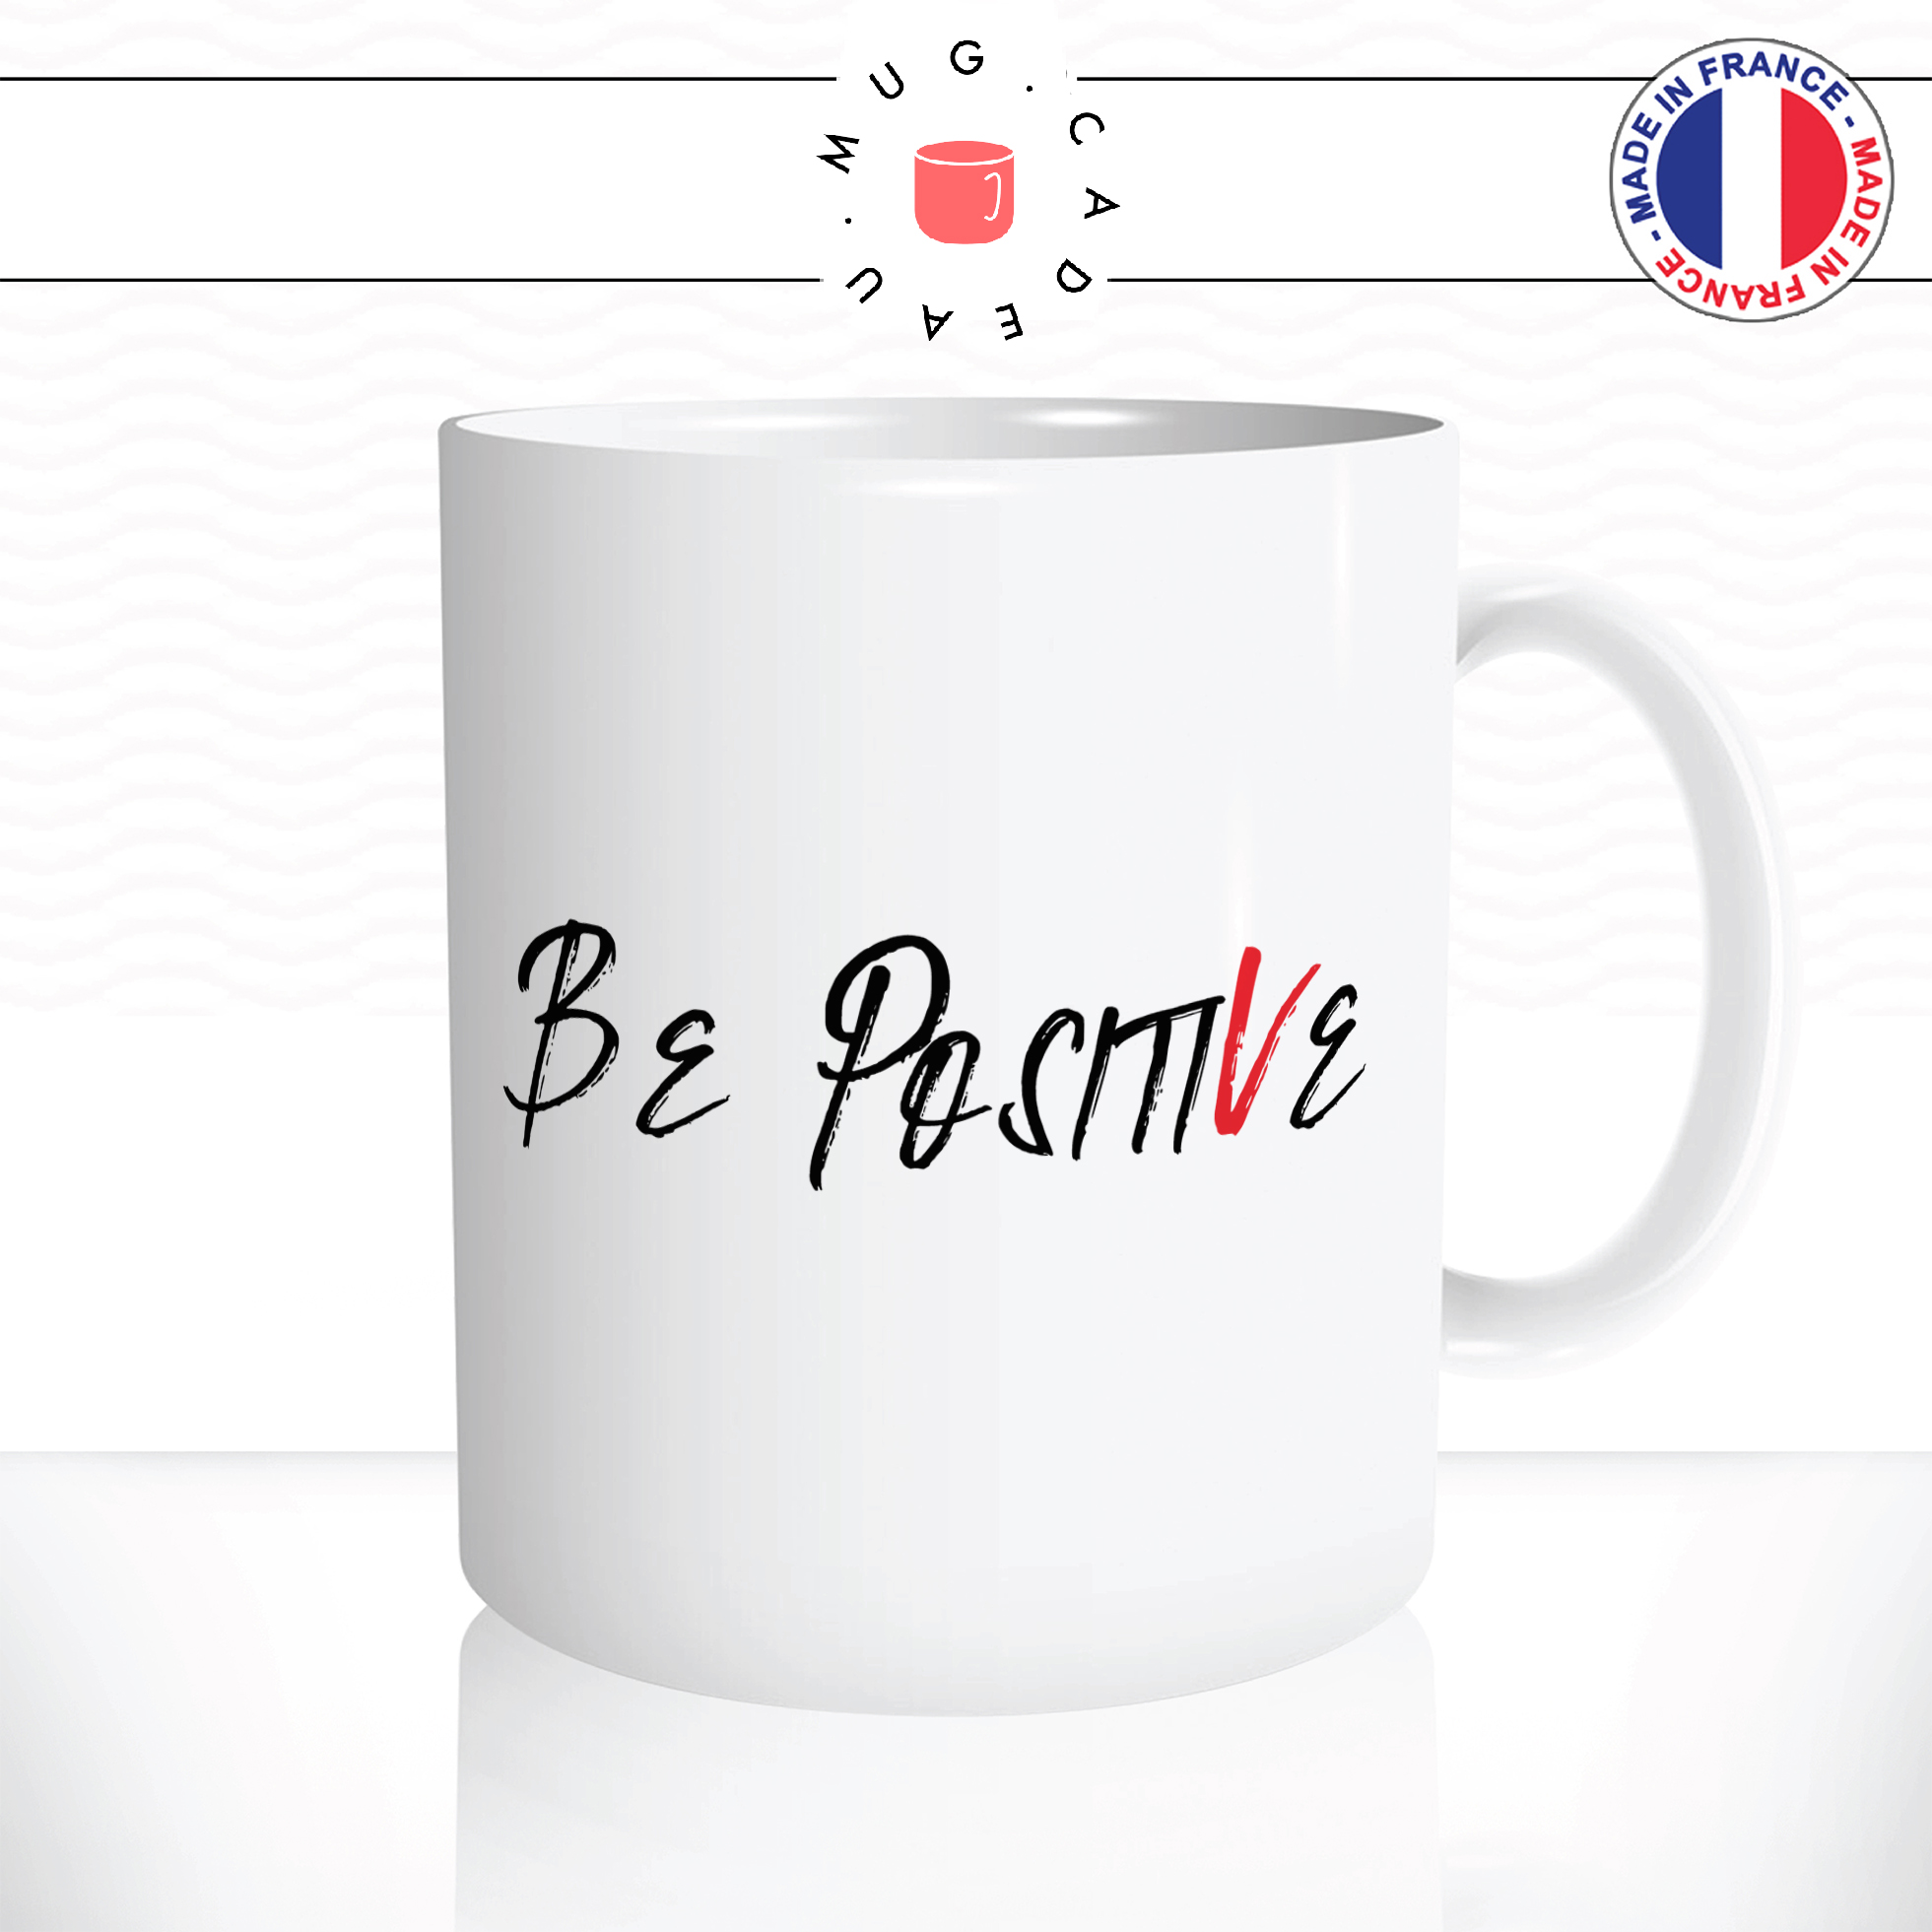 mug-tasse-ref42-citation-heureuse-be-positive-cafe-the-mugs-tasses-personnalise-anse-droite